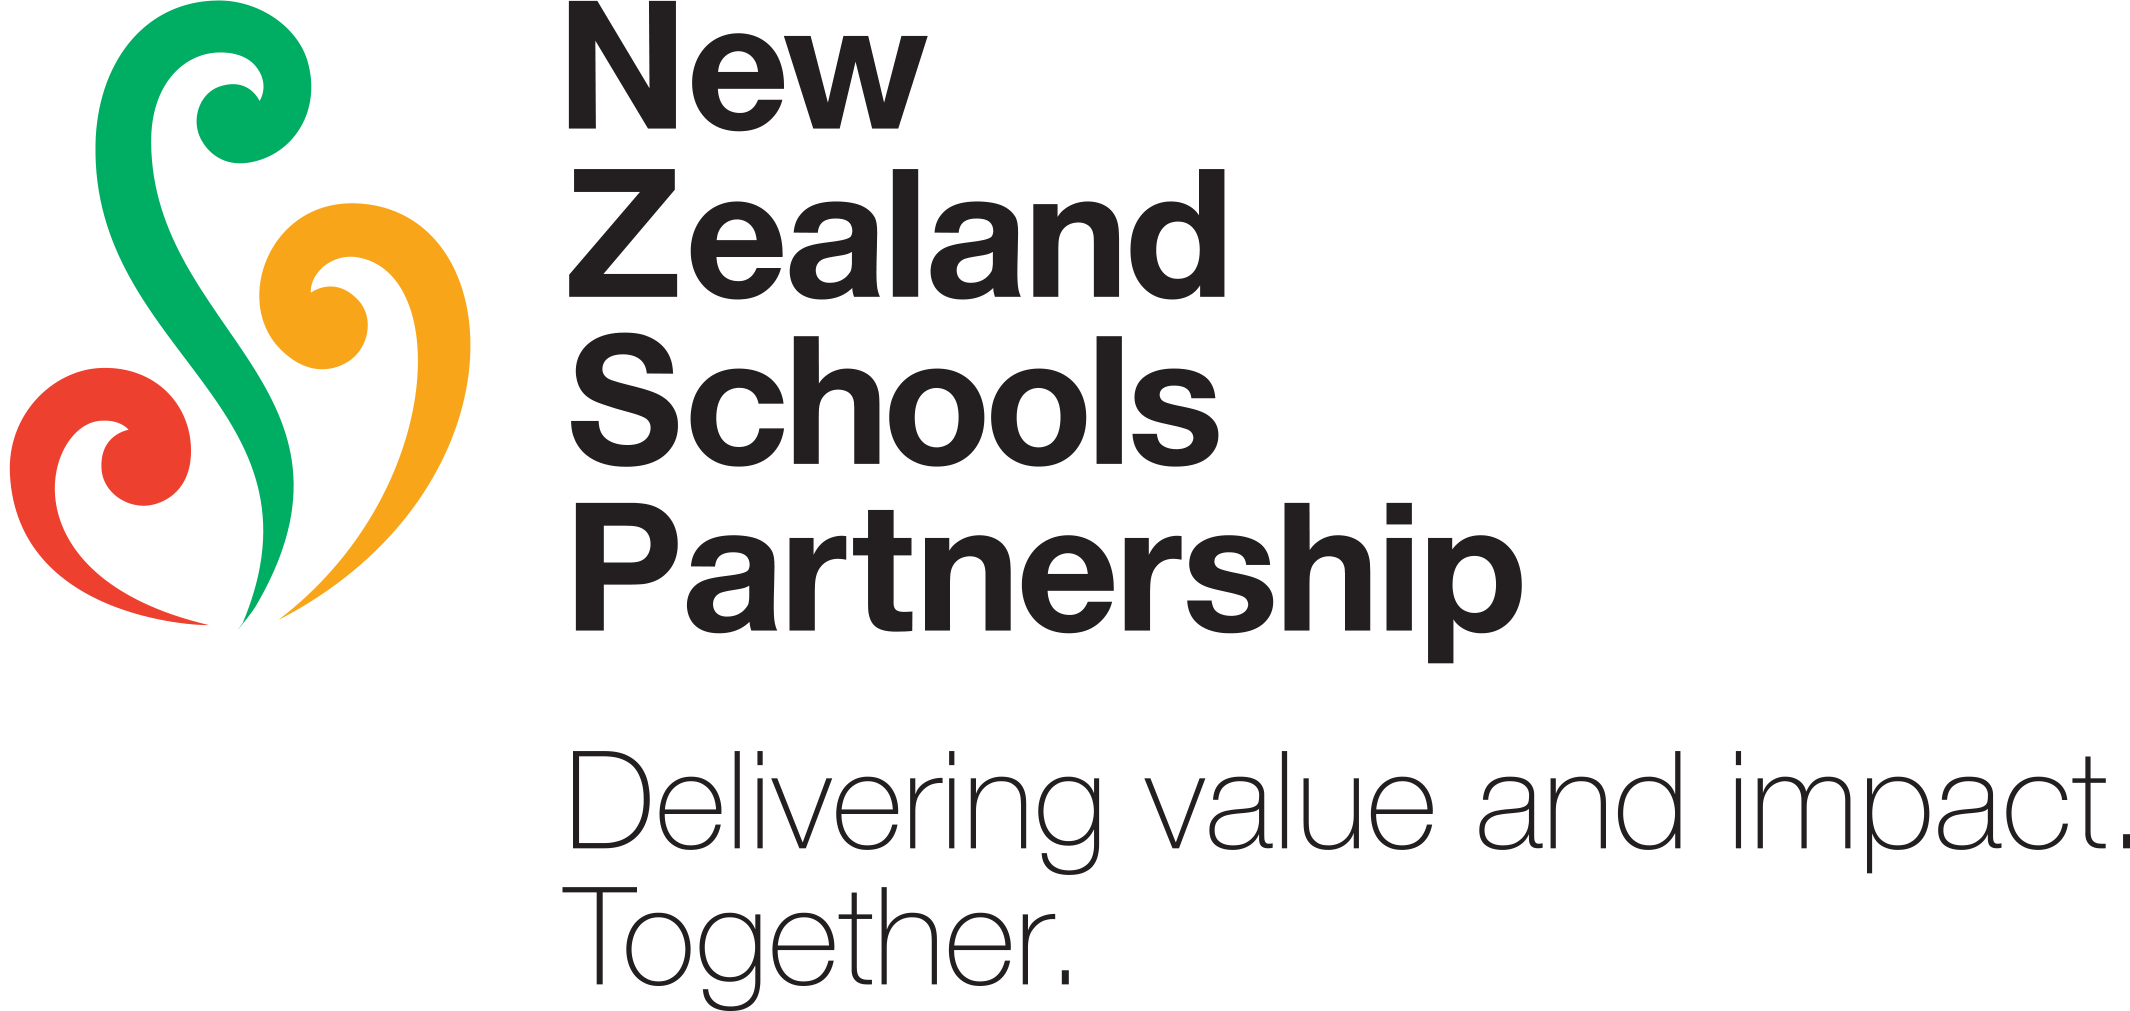 New Zealand Schools Partnership